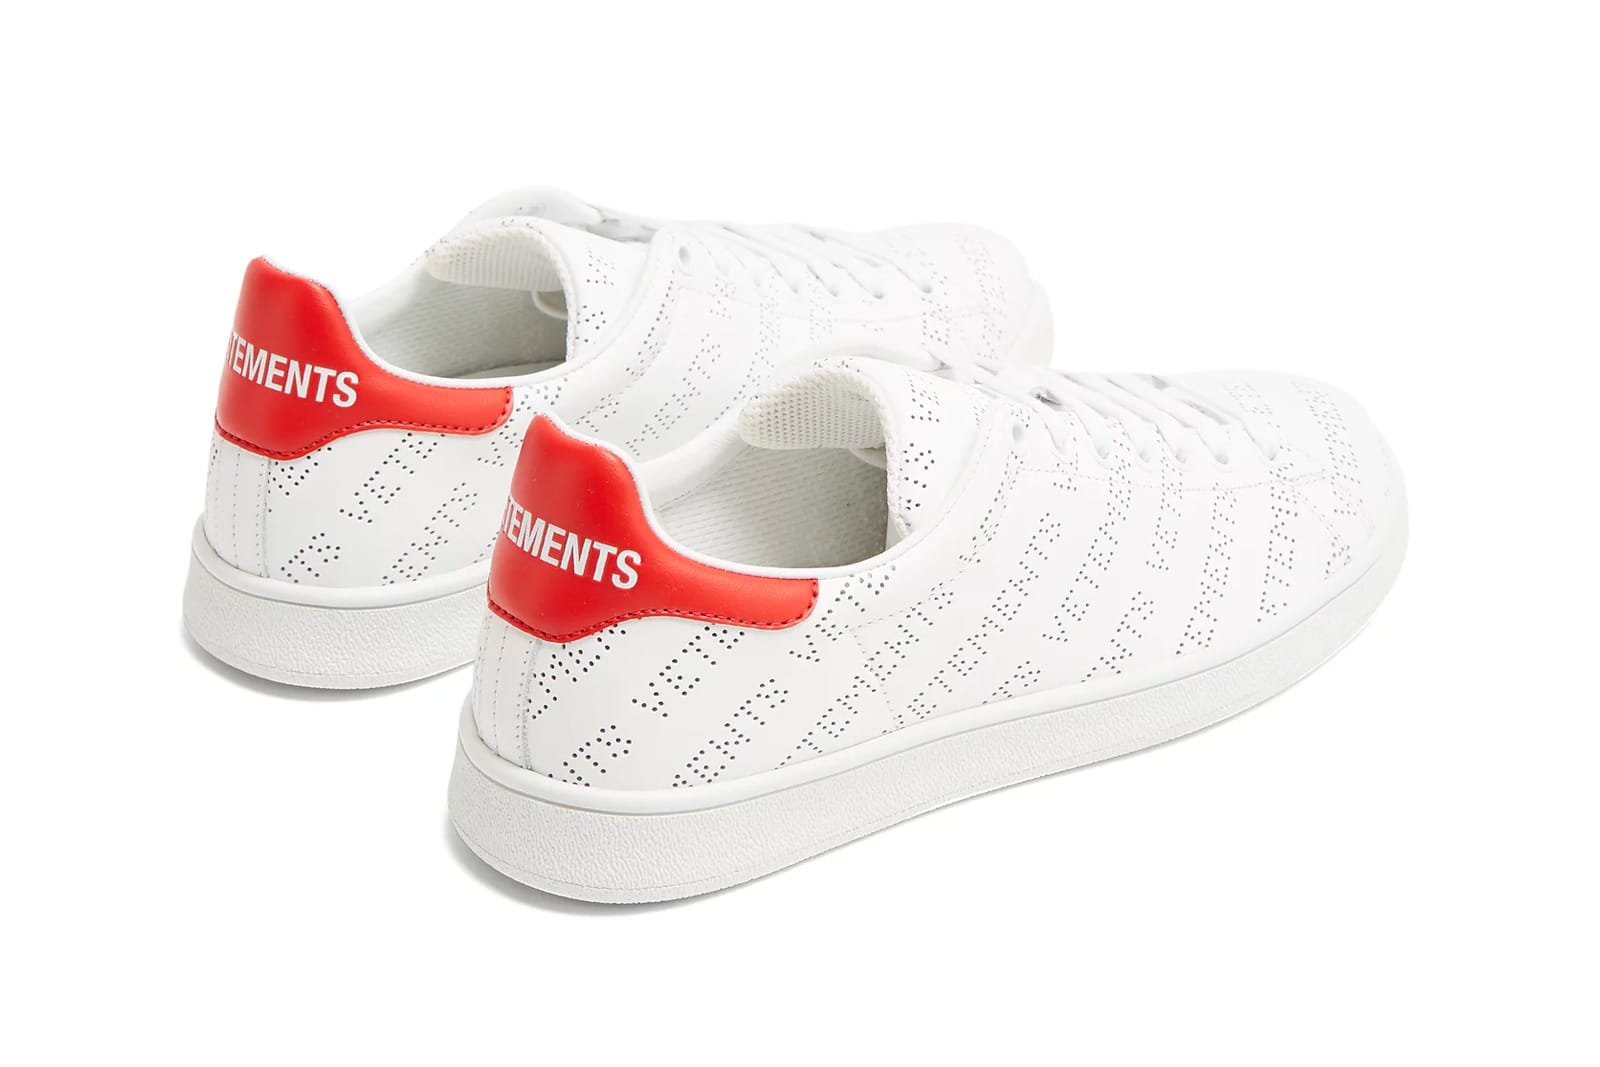 Vetements Stan Smith-Lookalike Sneakers Release | HYPEBEAST